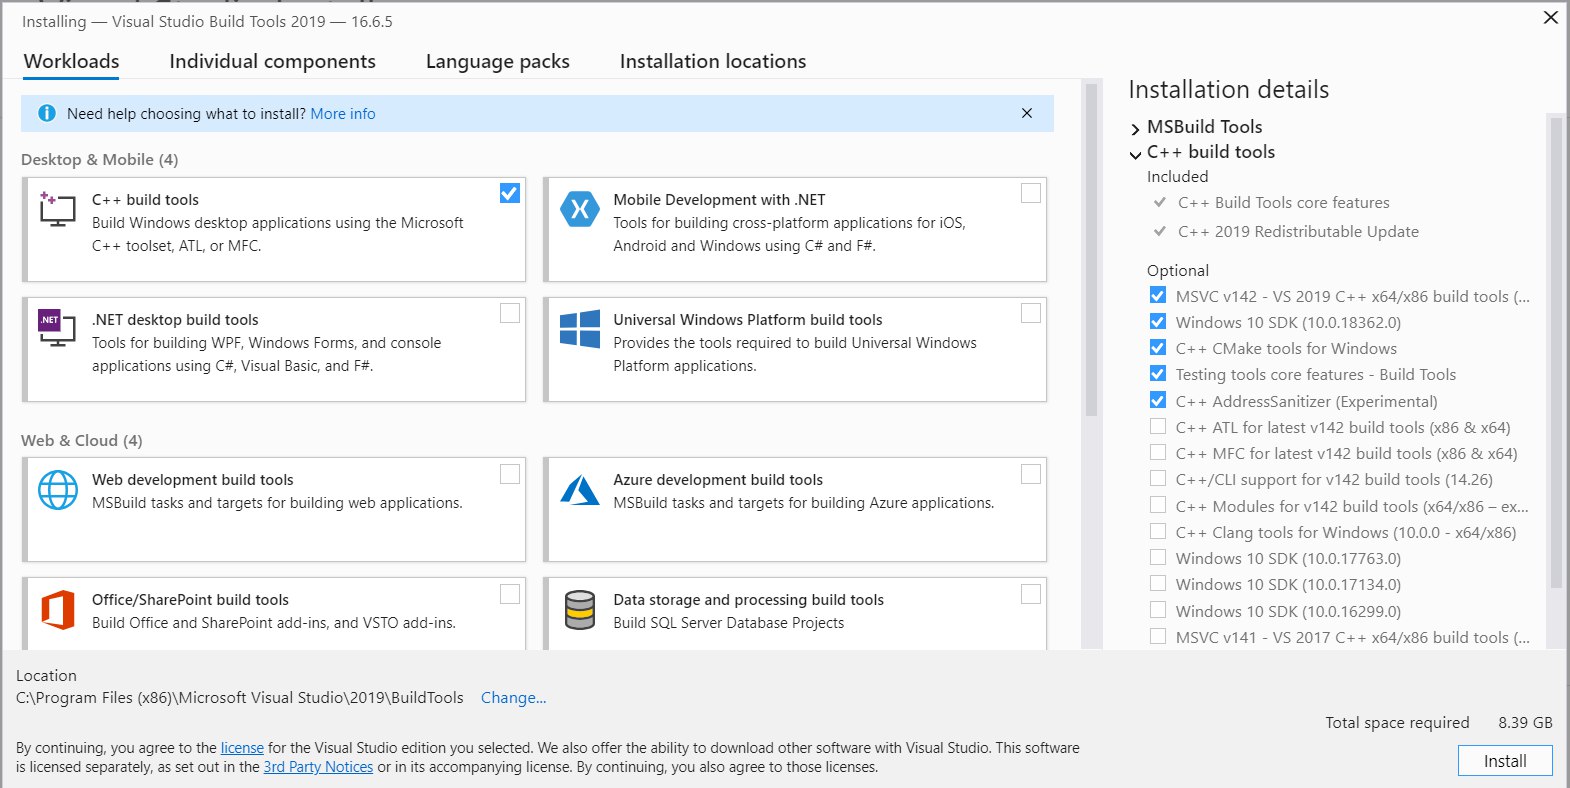 Microsoft Build Tools for Visual Studio 2019 installation